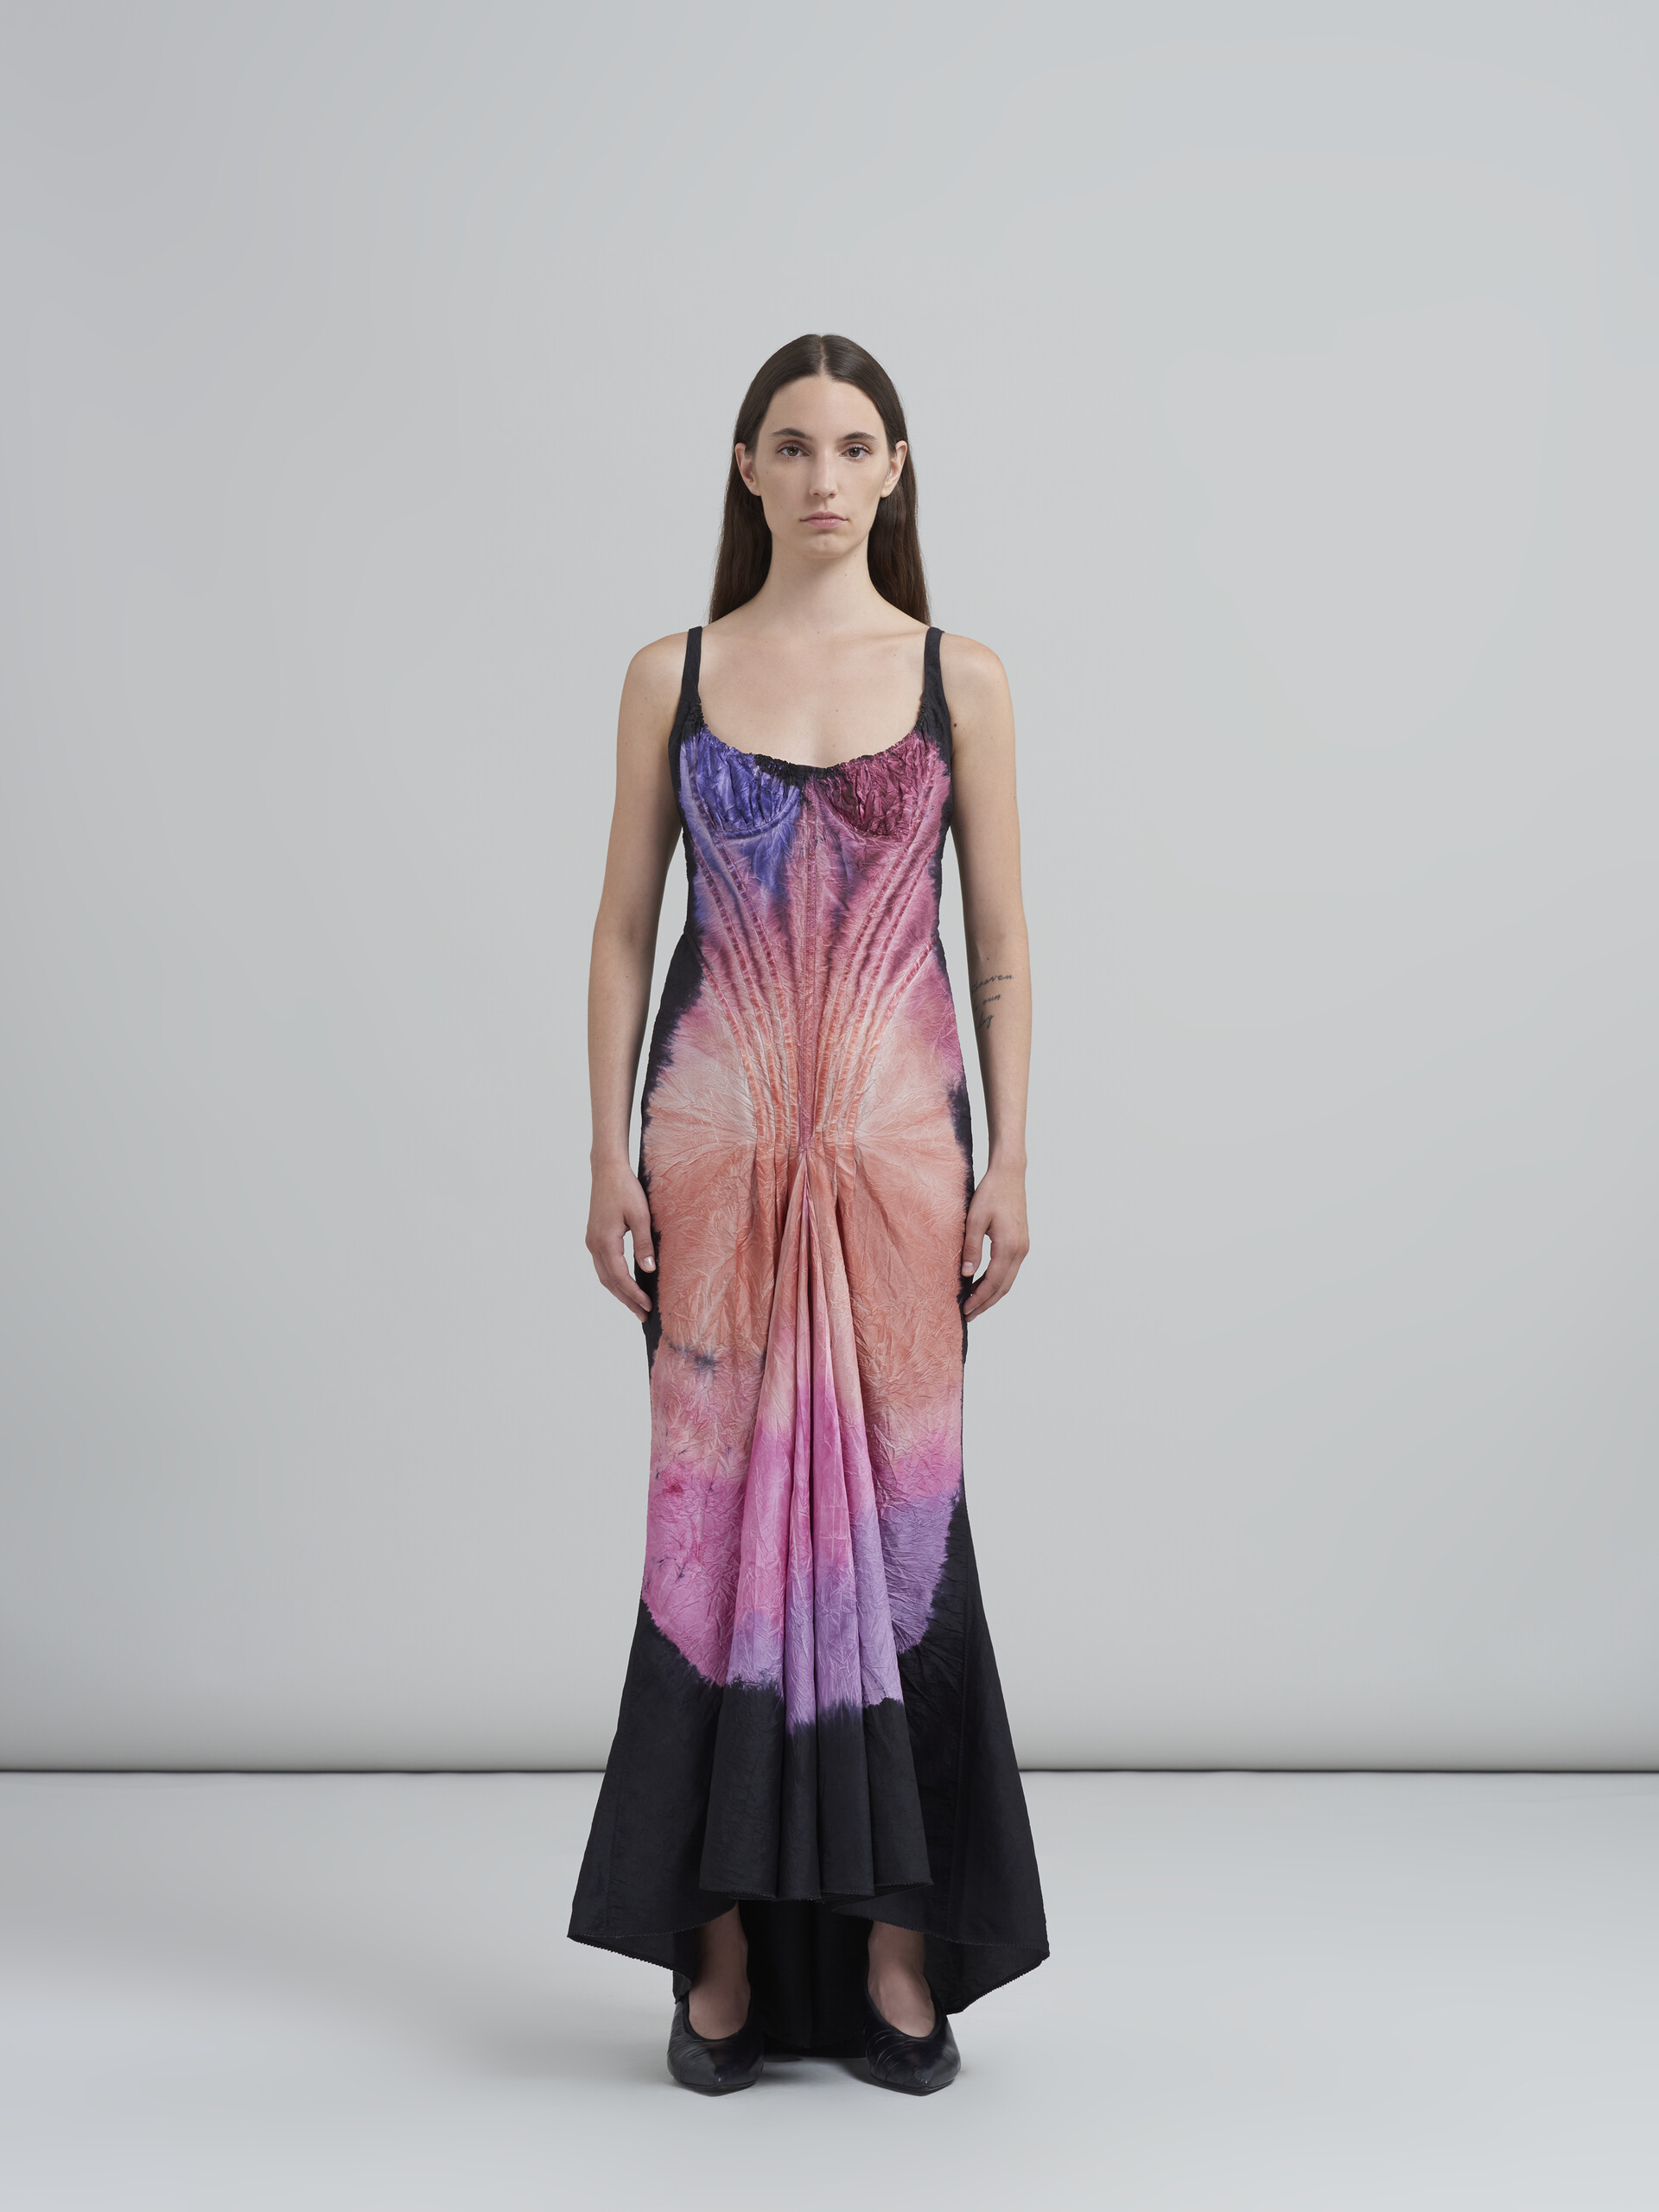 Vestido de tafetán de seda con teñido arco iris - Vestidos - Image 2